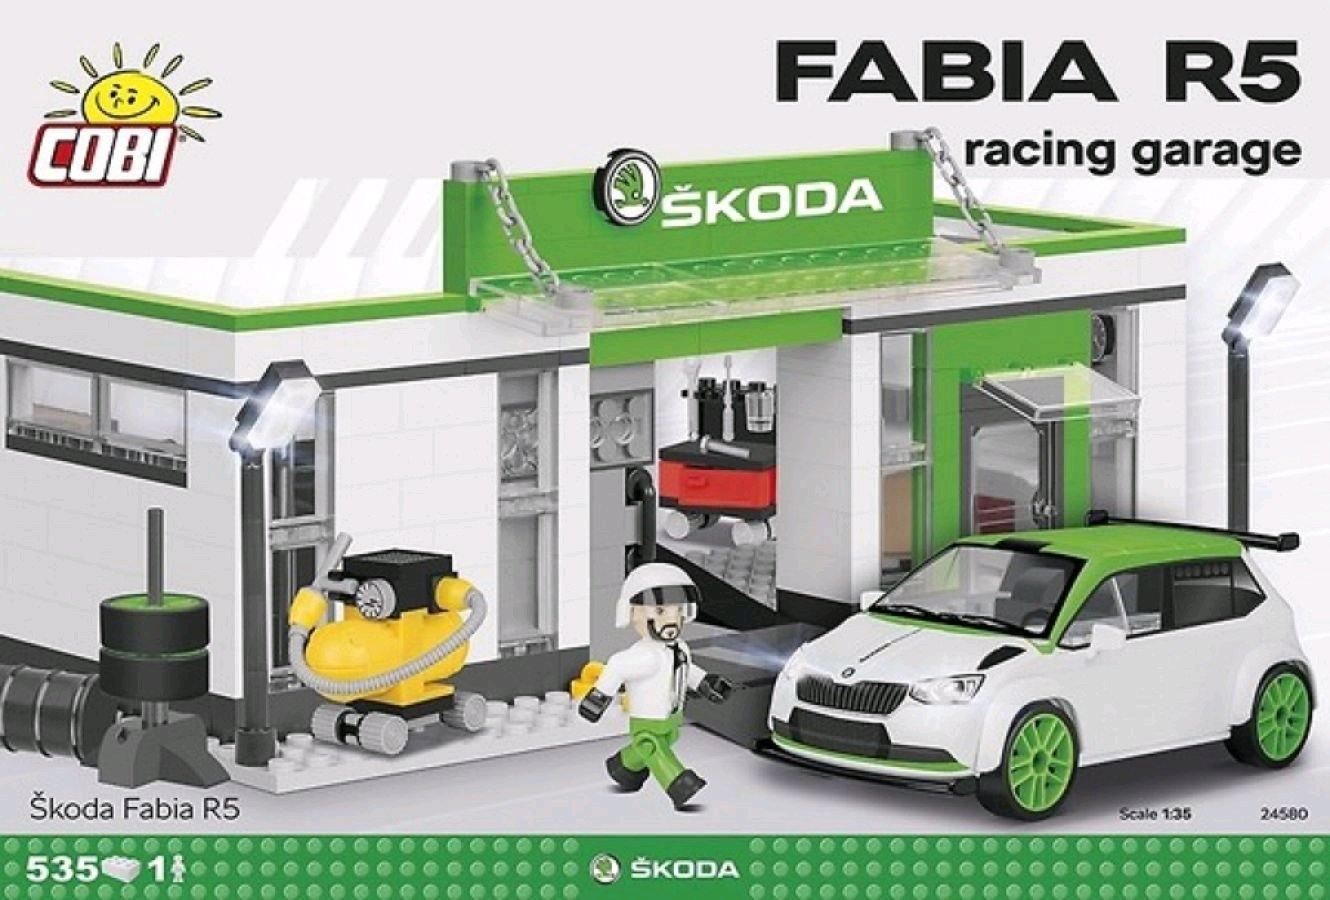 COB24580 Skoda - Skoda Fabia R5 Racing Garage 525 piece Construction Set - Cobi - Titan Pop Culture